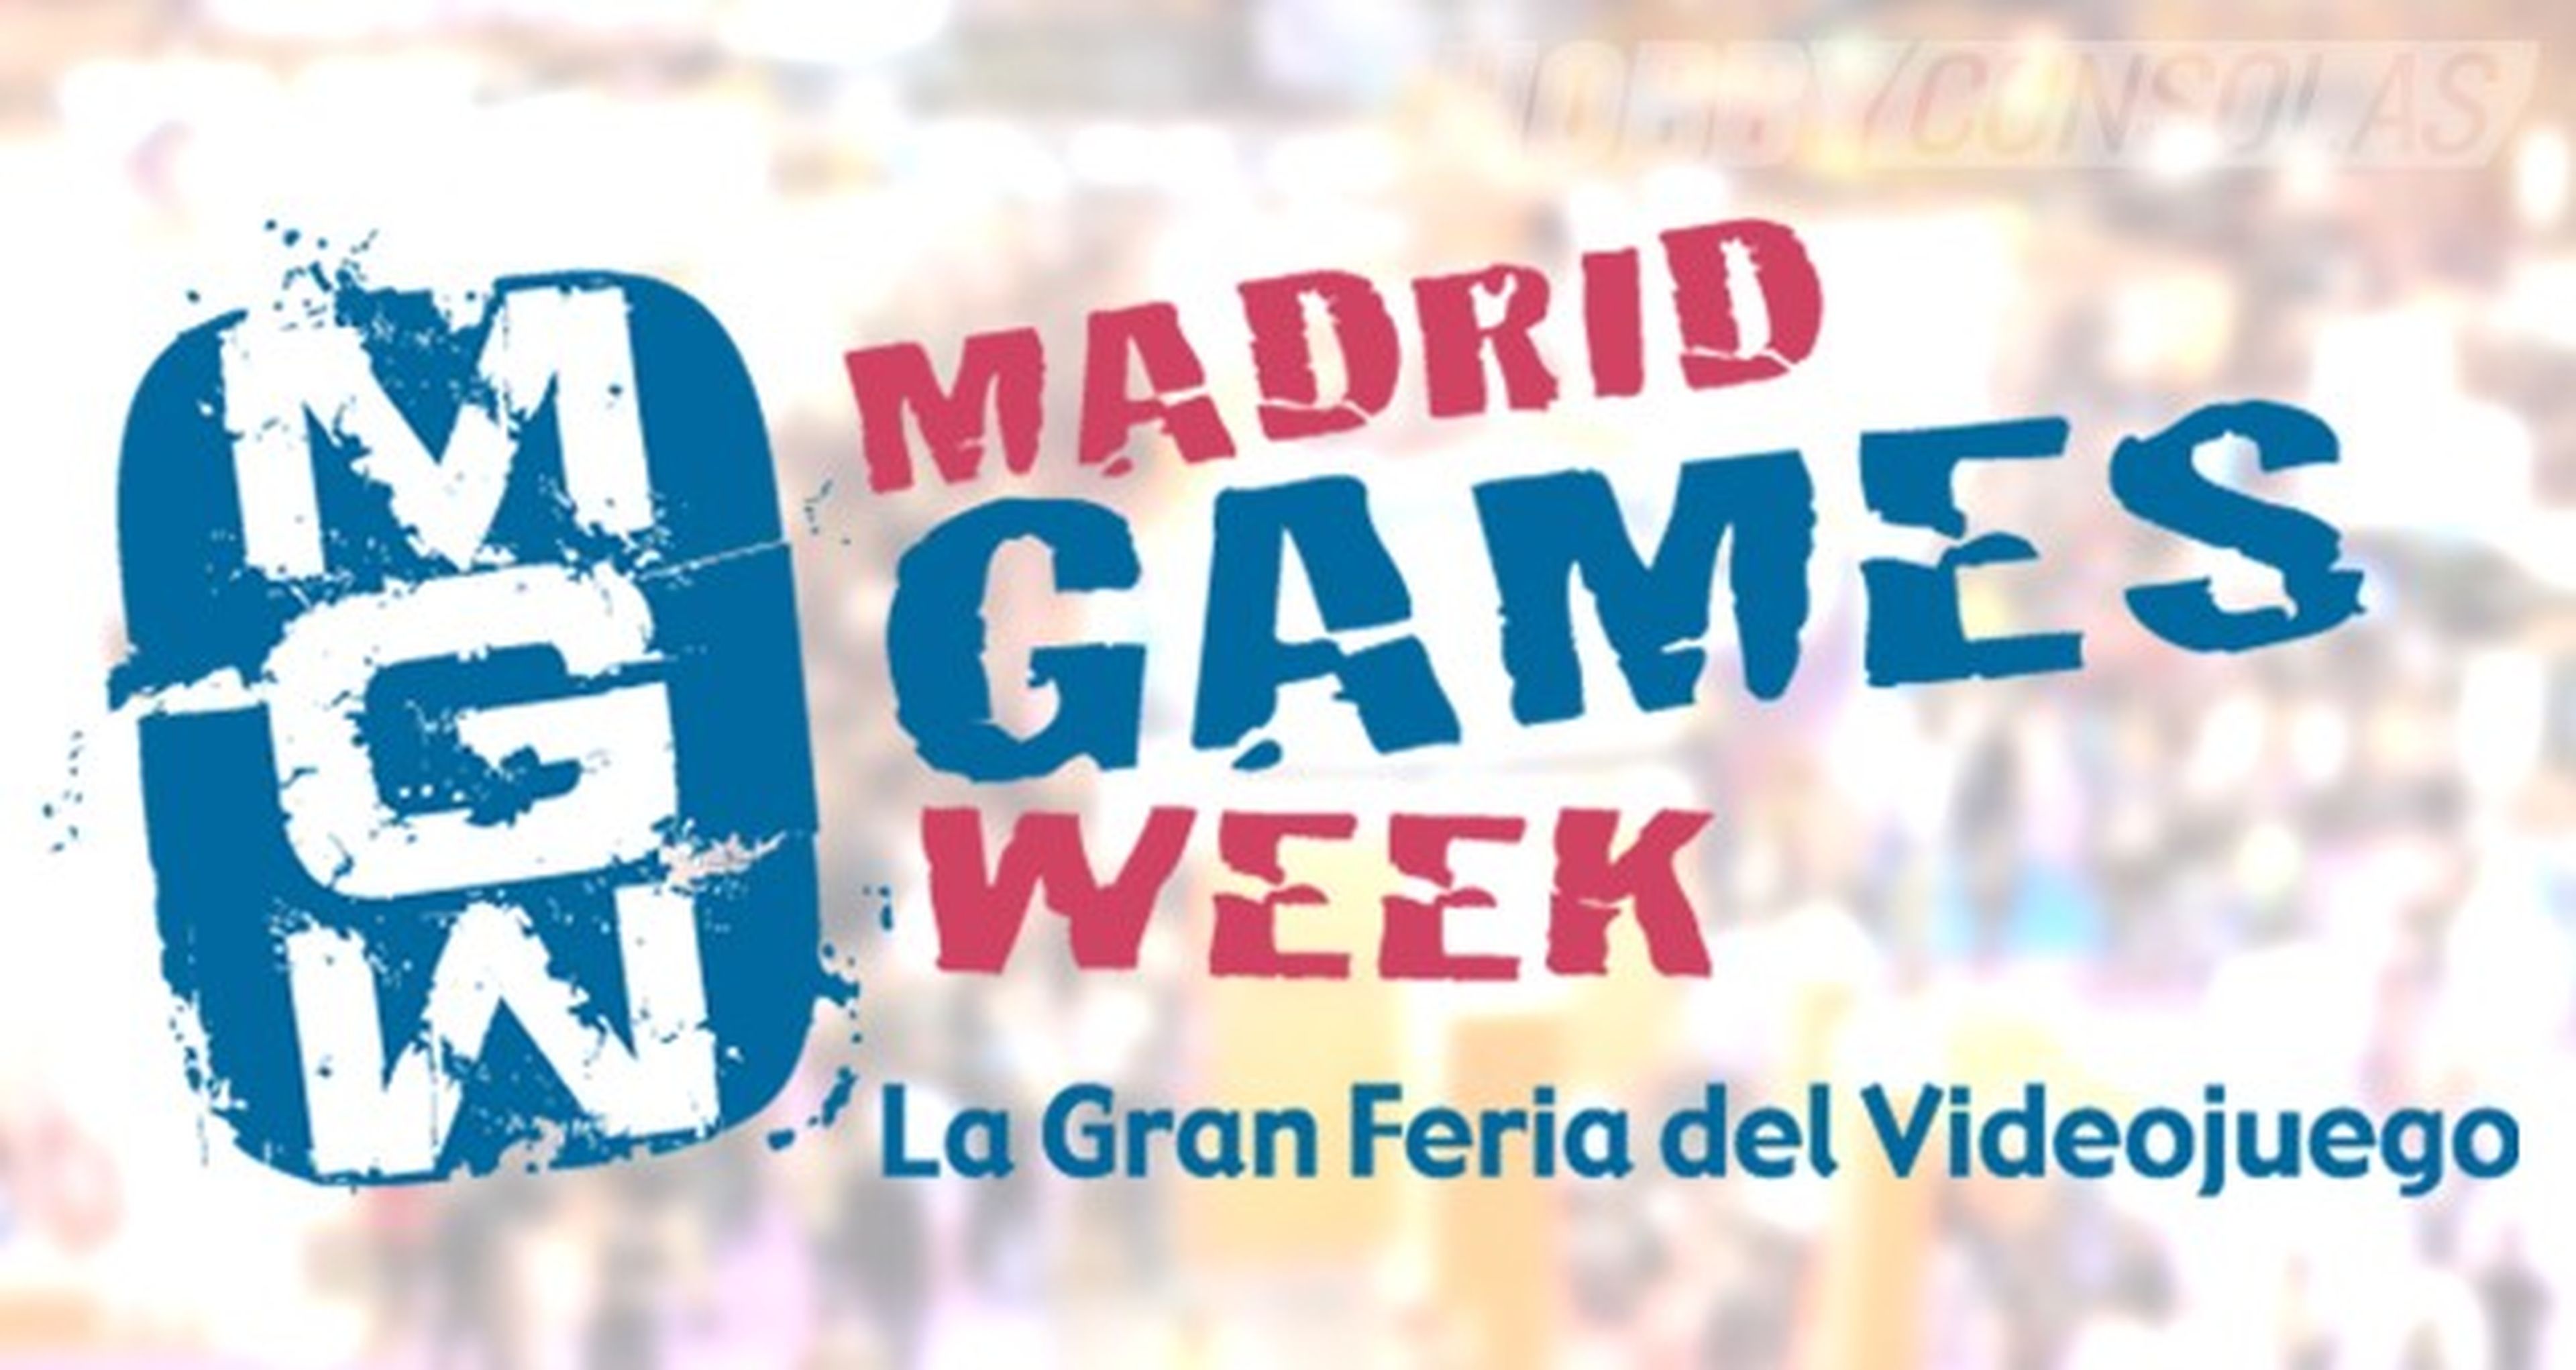 Madrid Games Week 2014: Bate récords de asistencia